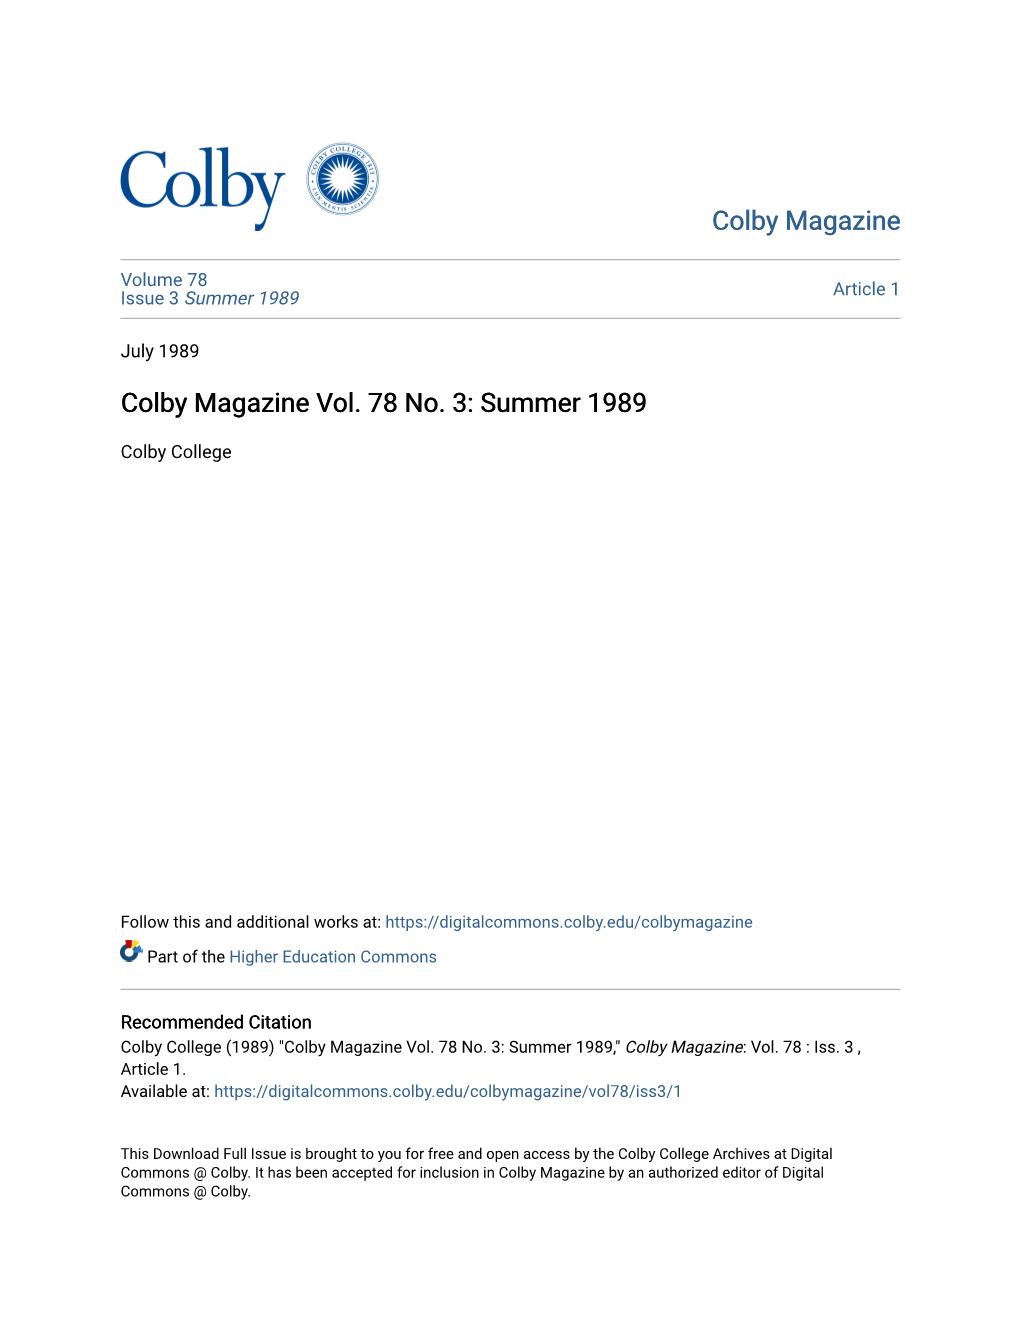 Colby Magazine Vol. 78 No. 3: Summer 1989